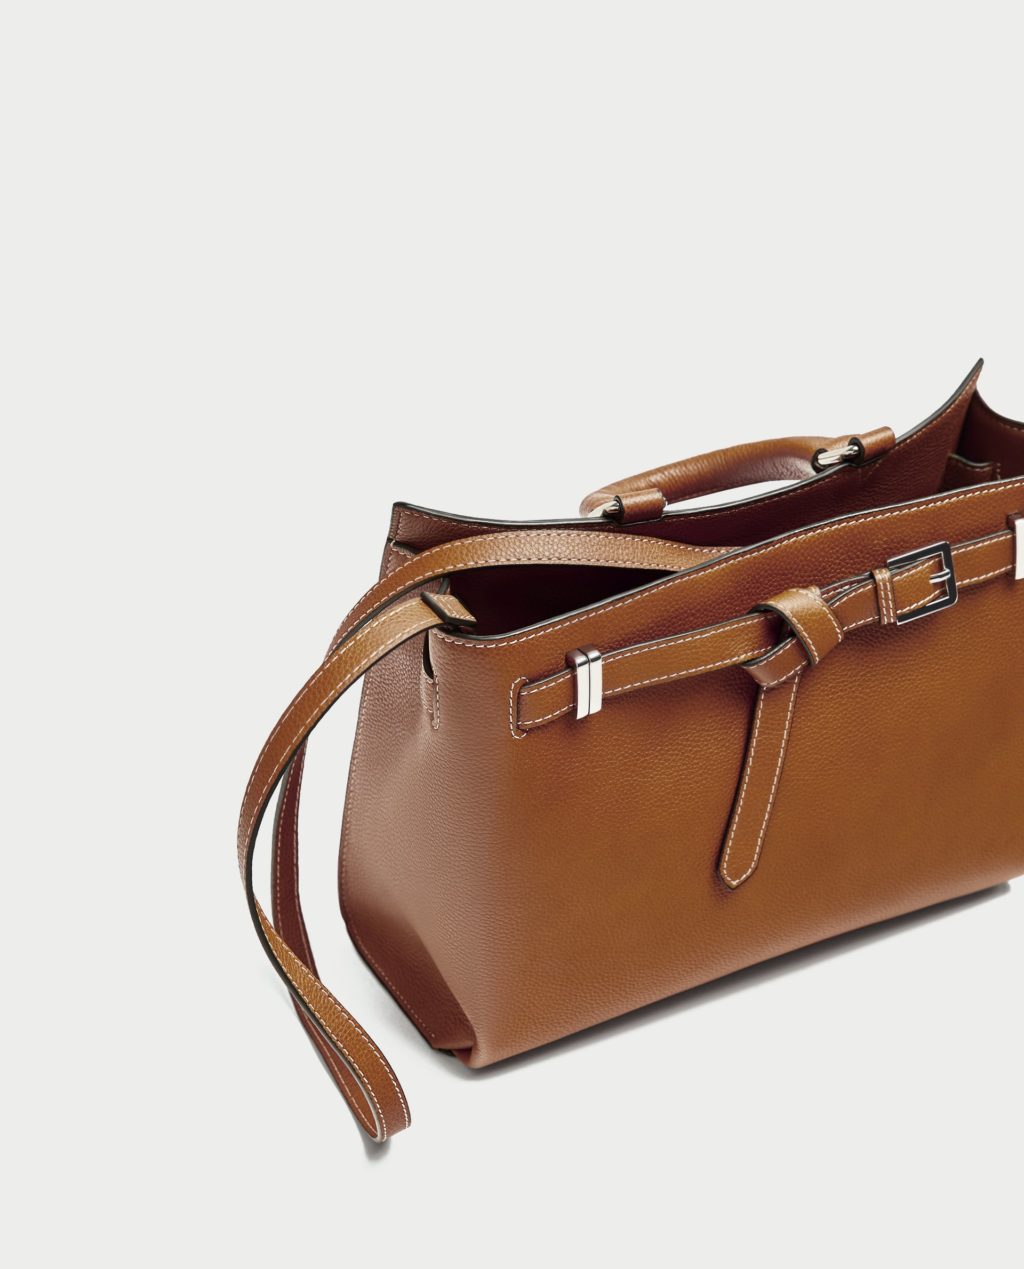 Zara brown leather bag